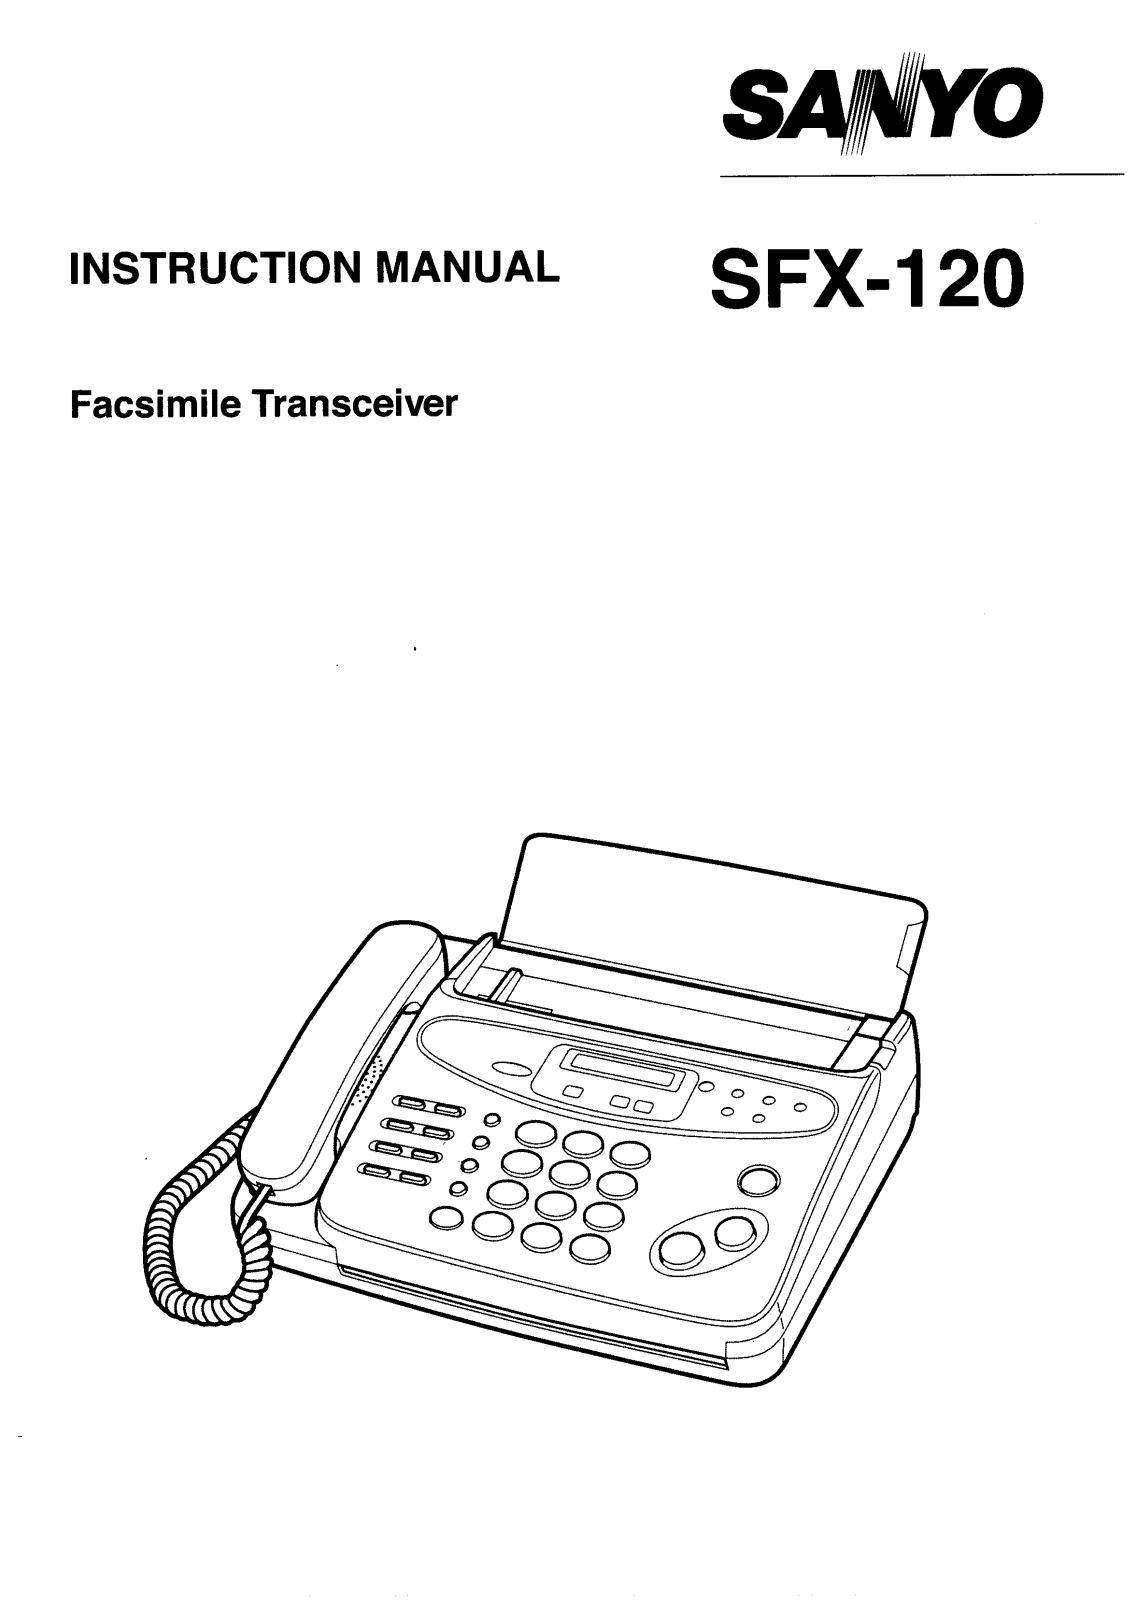 Sanyo SFX-120 Instruction Manual